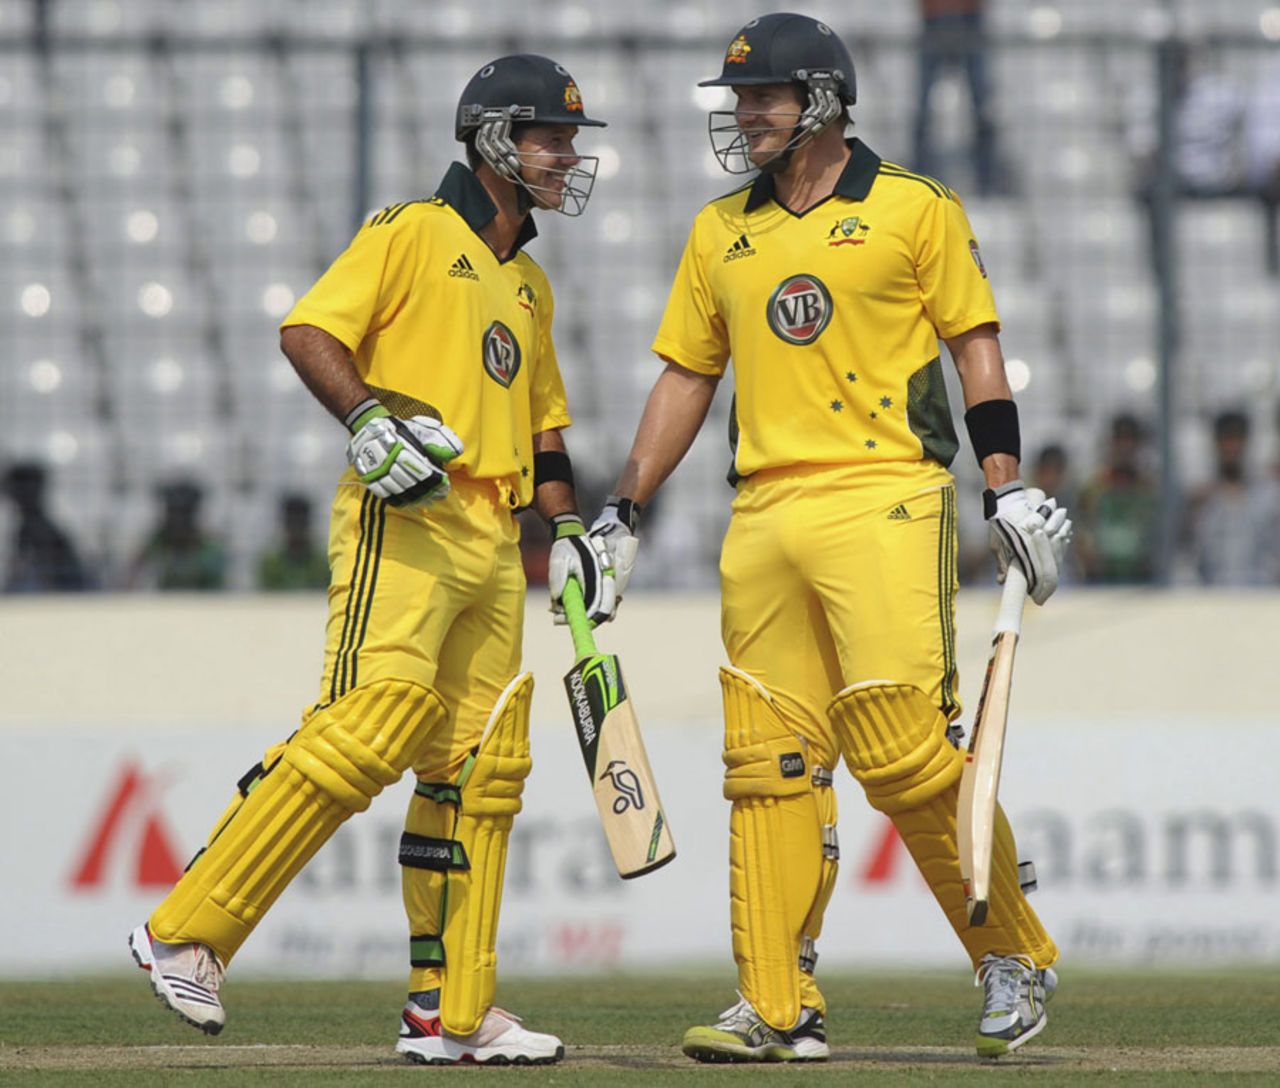 Shane Watson and Ricky Ponting added 110 runs in 71 balls, Bangladesh v Australia, 3rd ODI, Mirpur, April 13, 2011